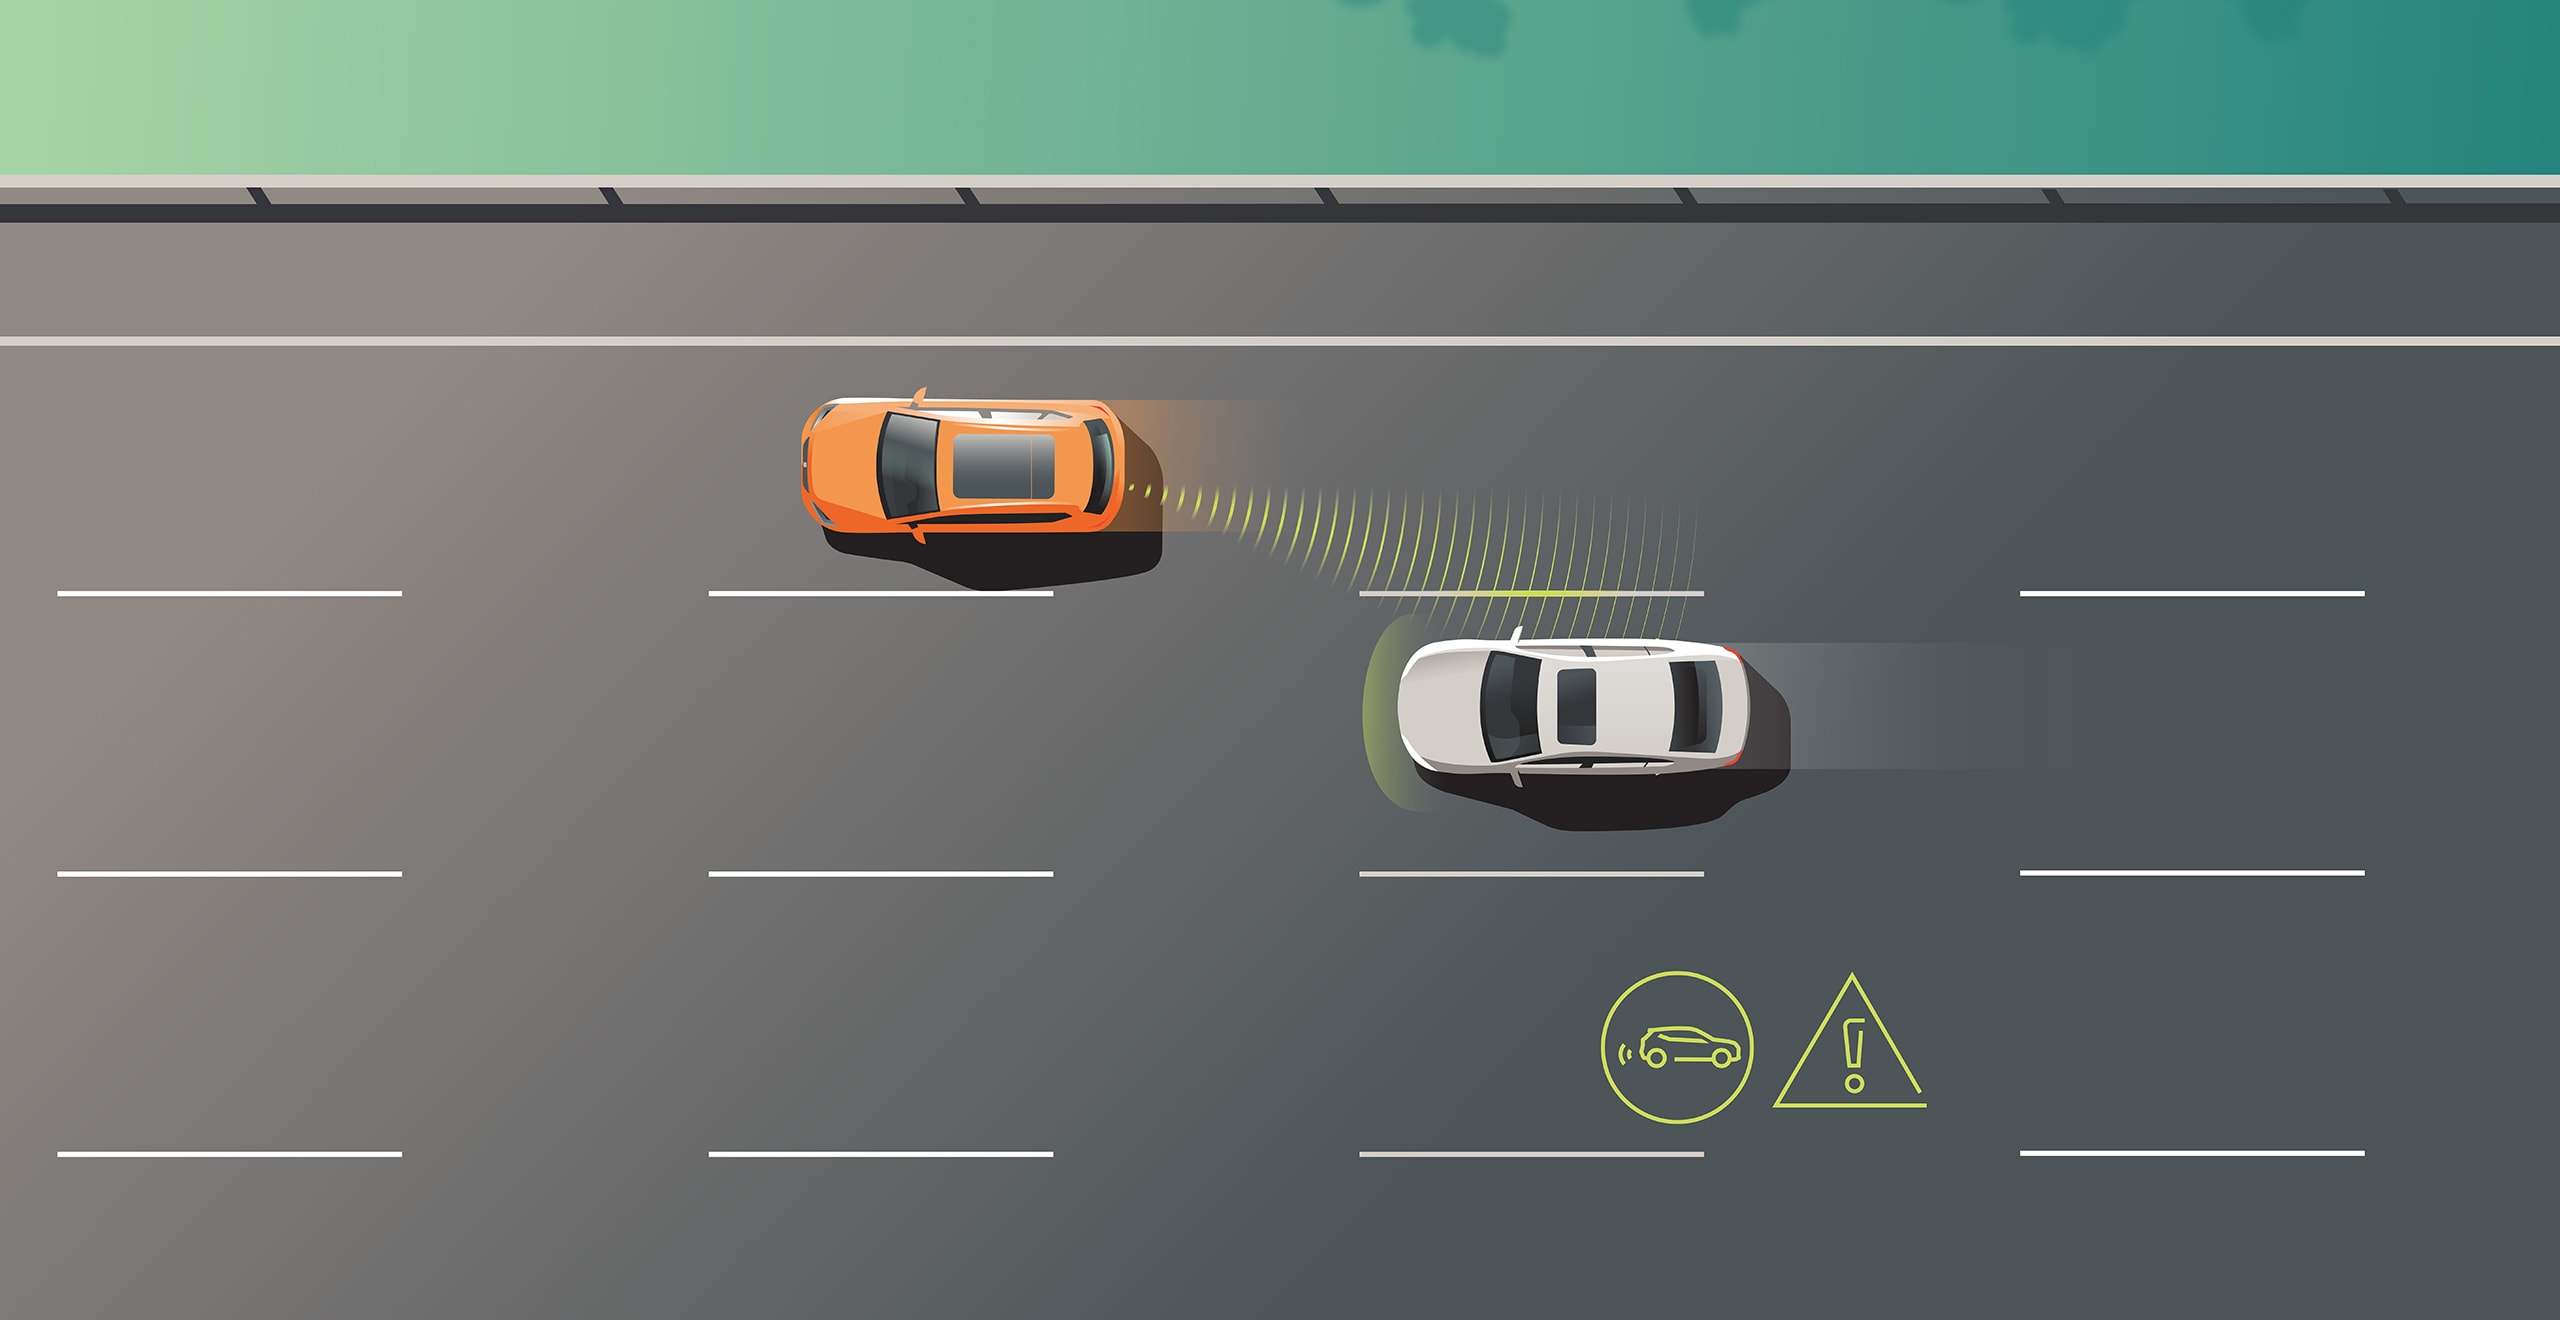 SEAT Leon 2020 technology features exist assistance technical illustration